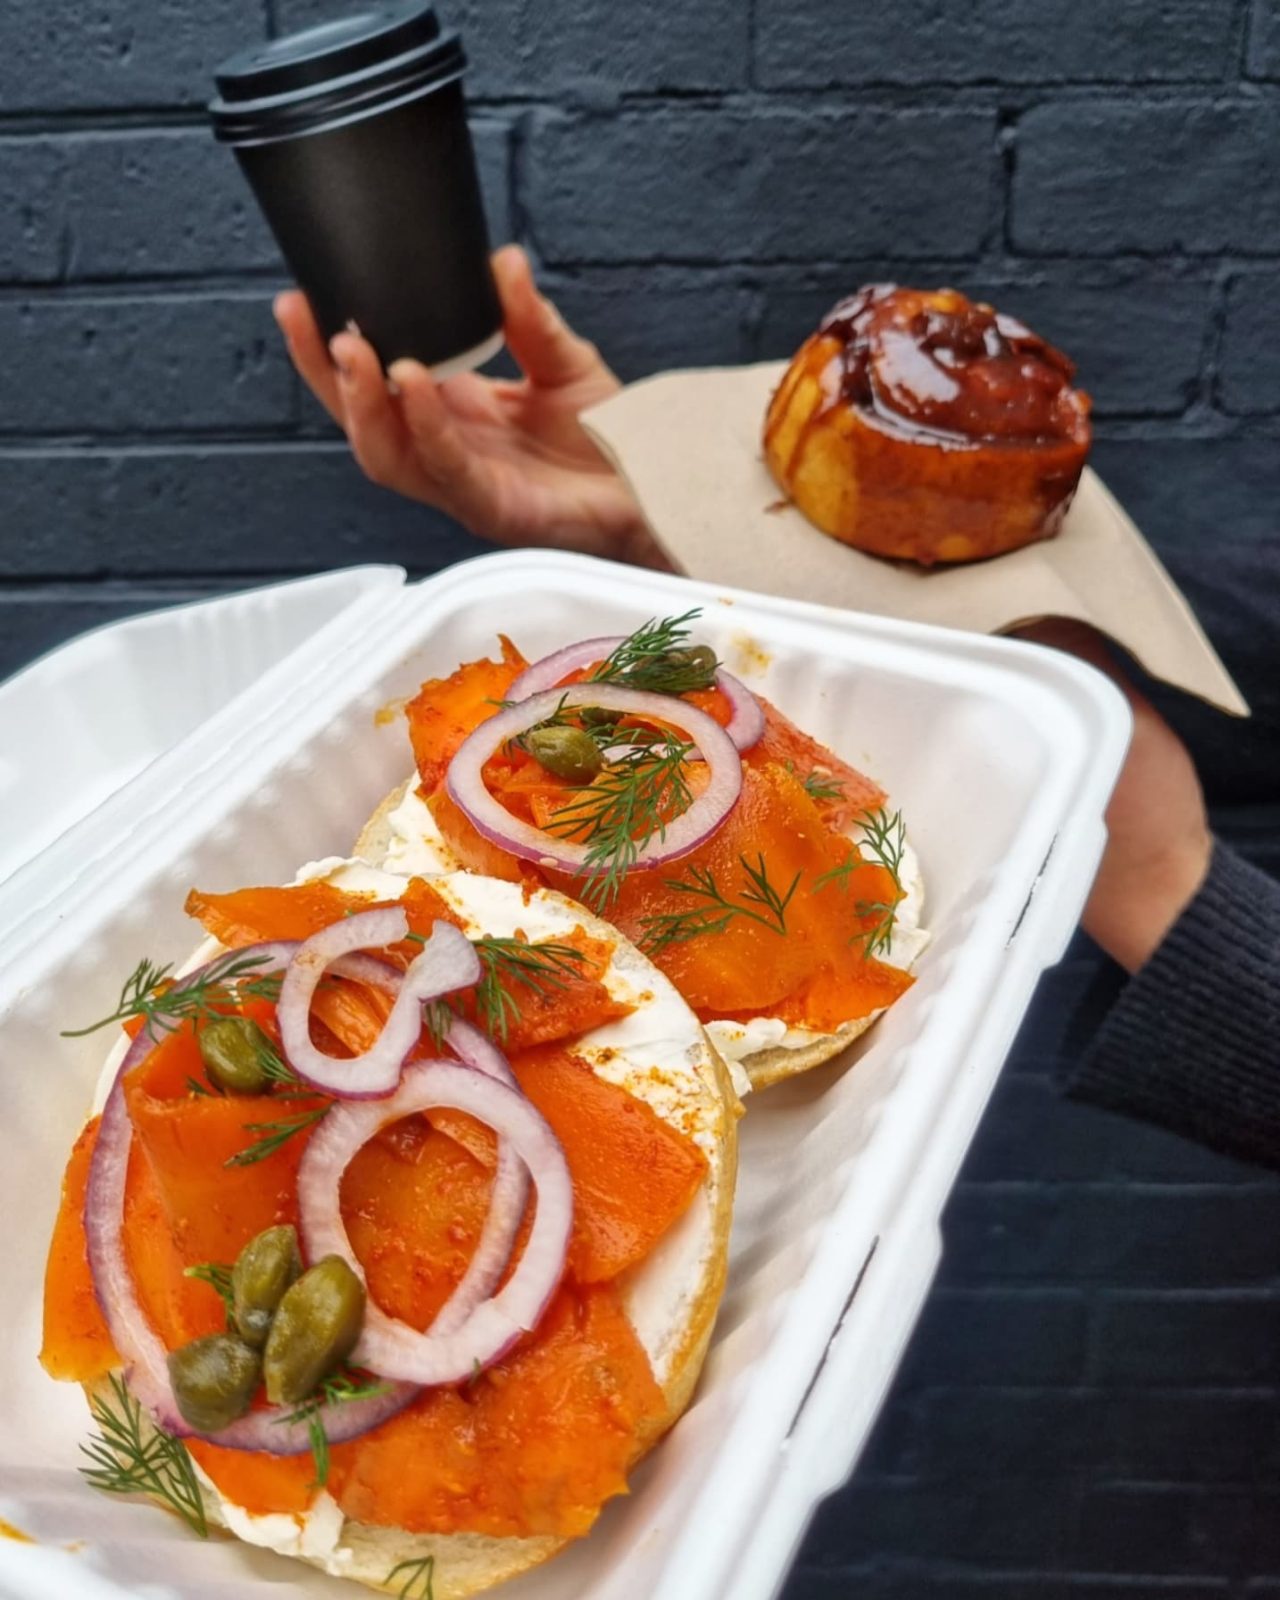 Bread Flower opens new bagel shop inside Ducie Street Warehouse, The Manc